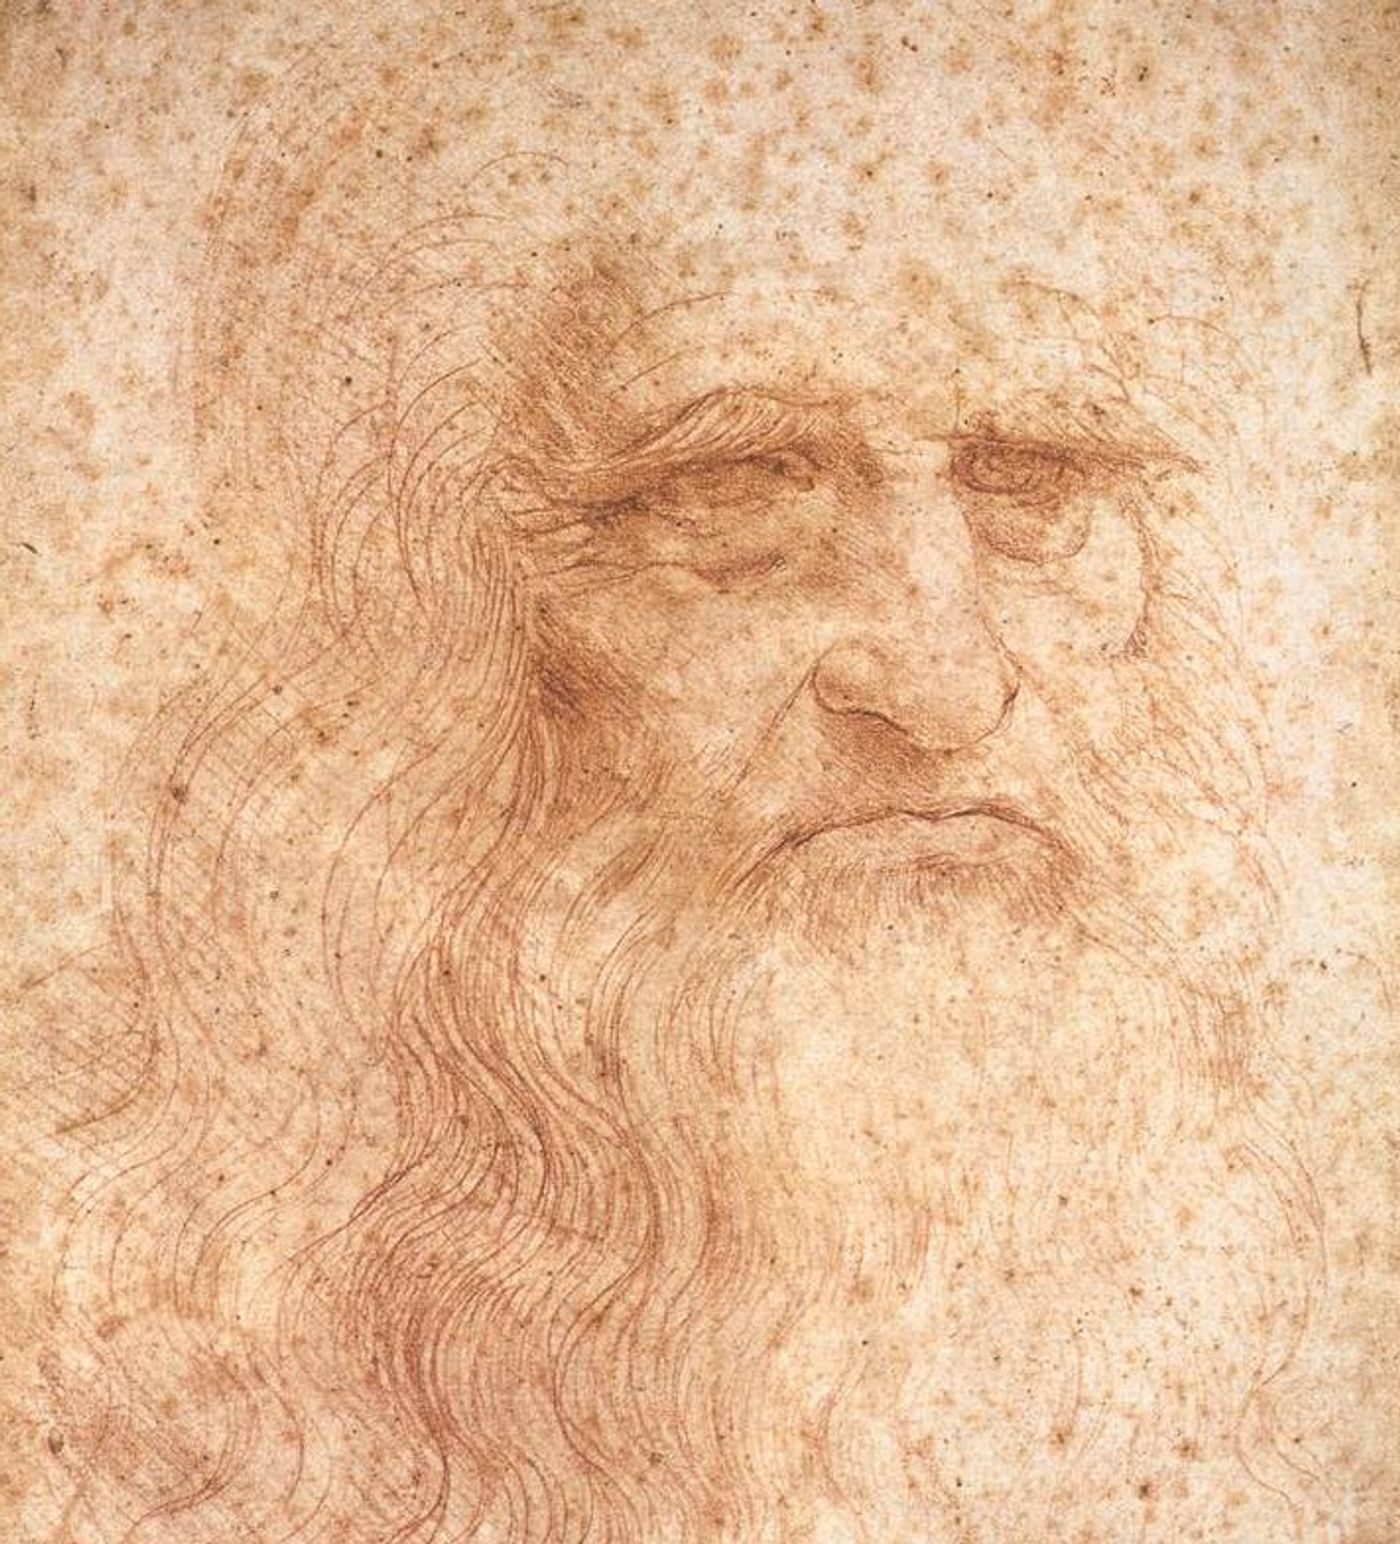 da Vinci's self portrait is covered in "foxing spots".